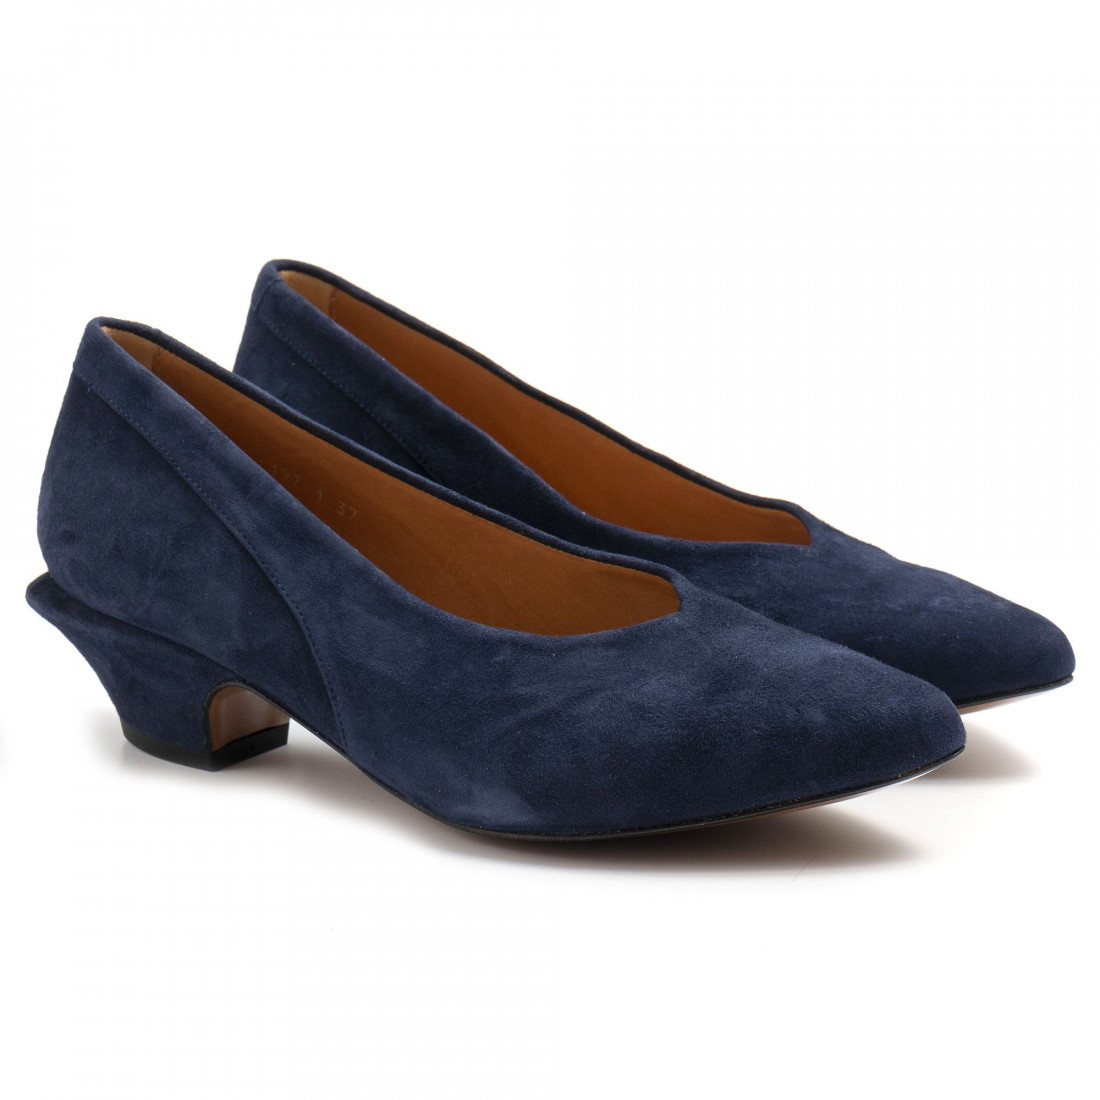 Low heel Audley pump in blue soft suede